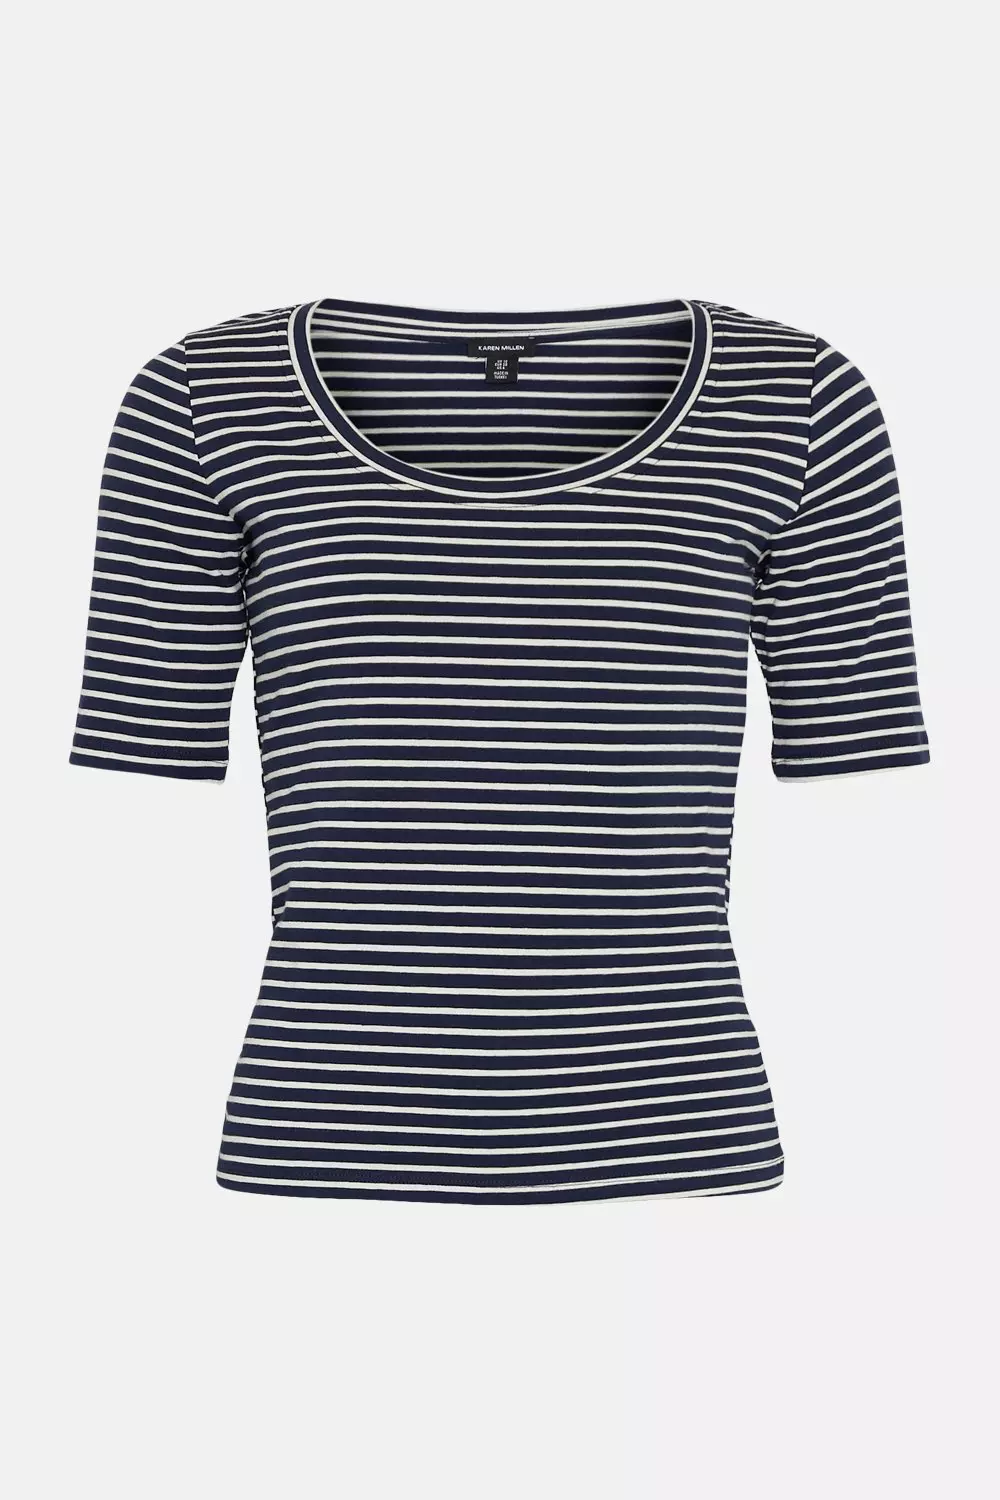 Karen Scott Womens Black White Horizontal Striped Short Sleeve T-Shirt Sz  Medium